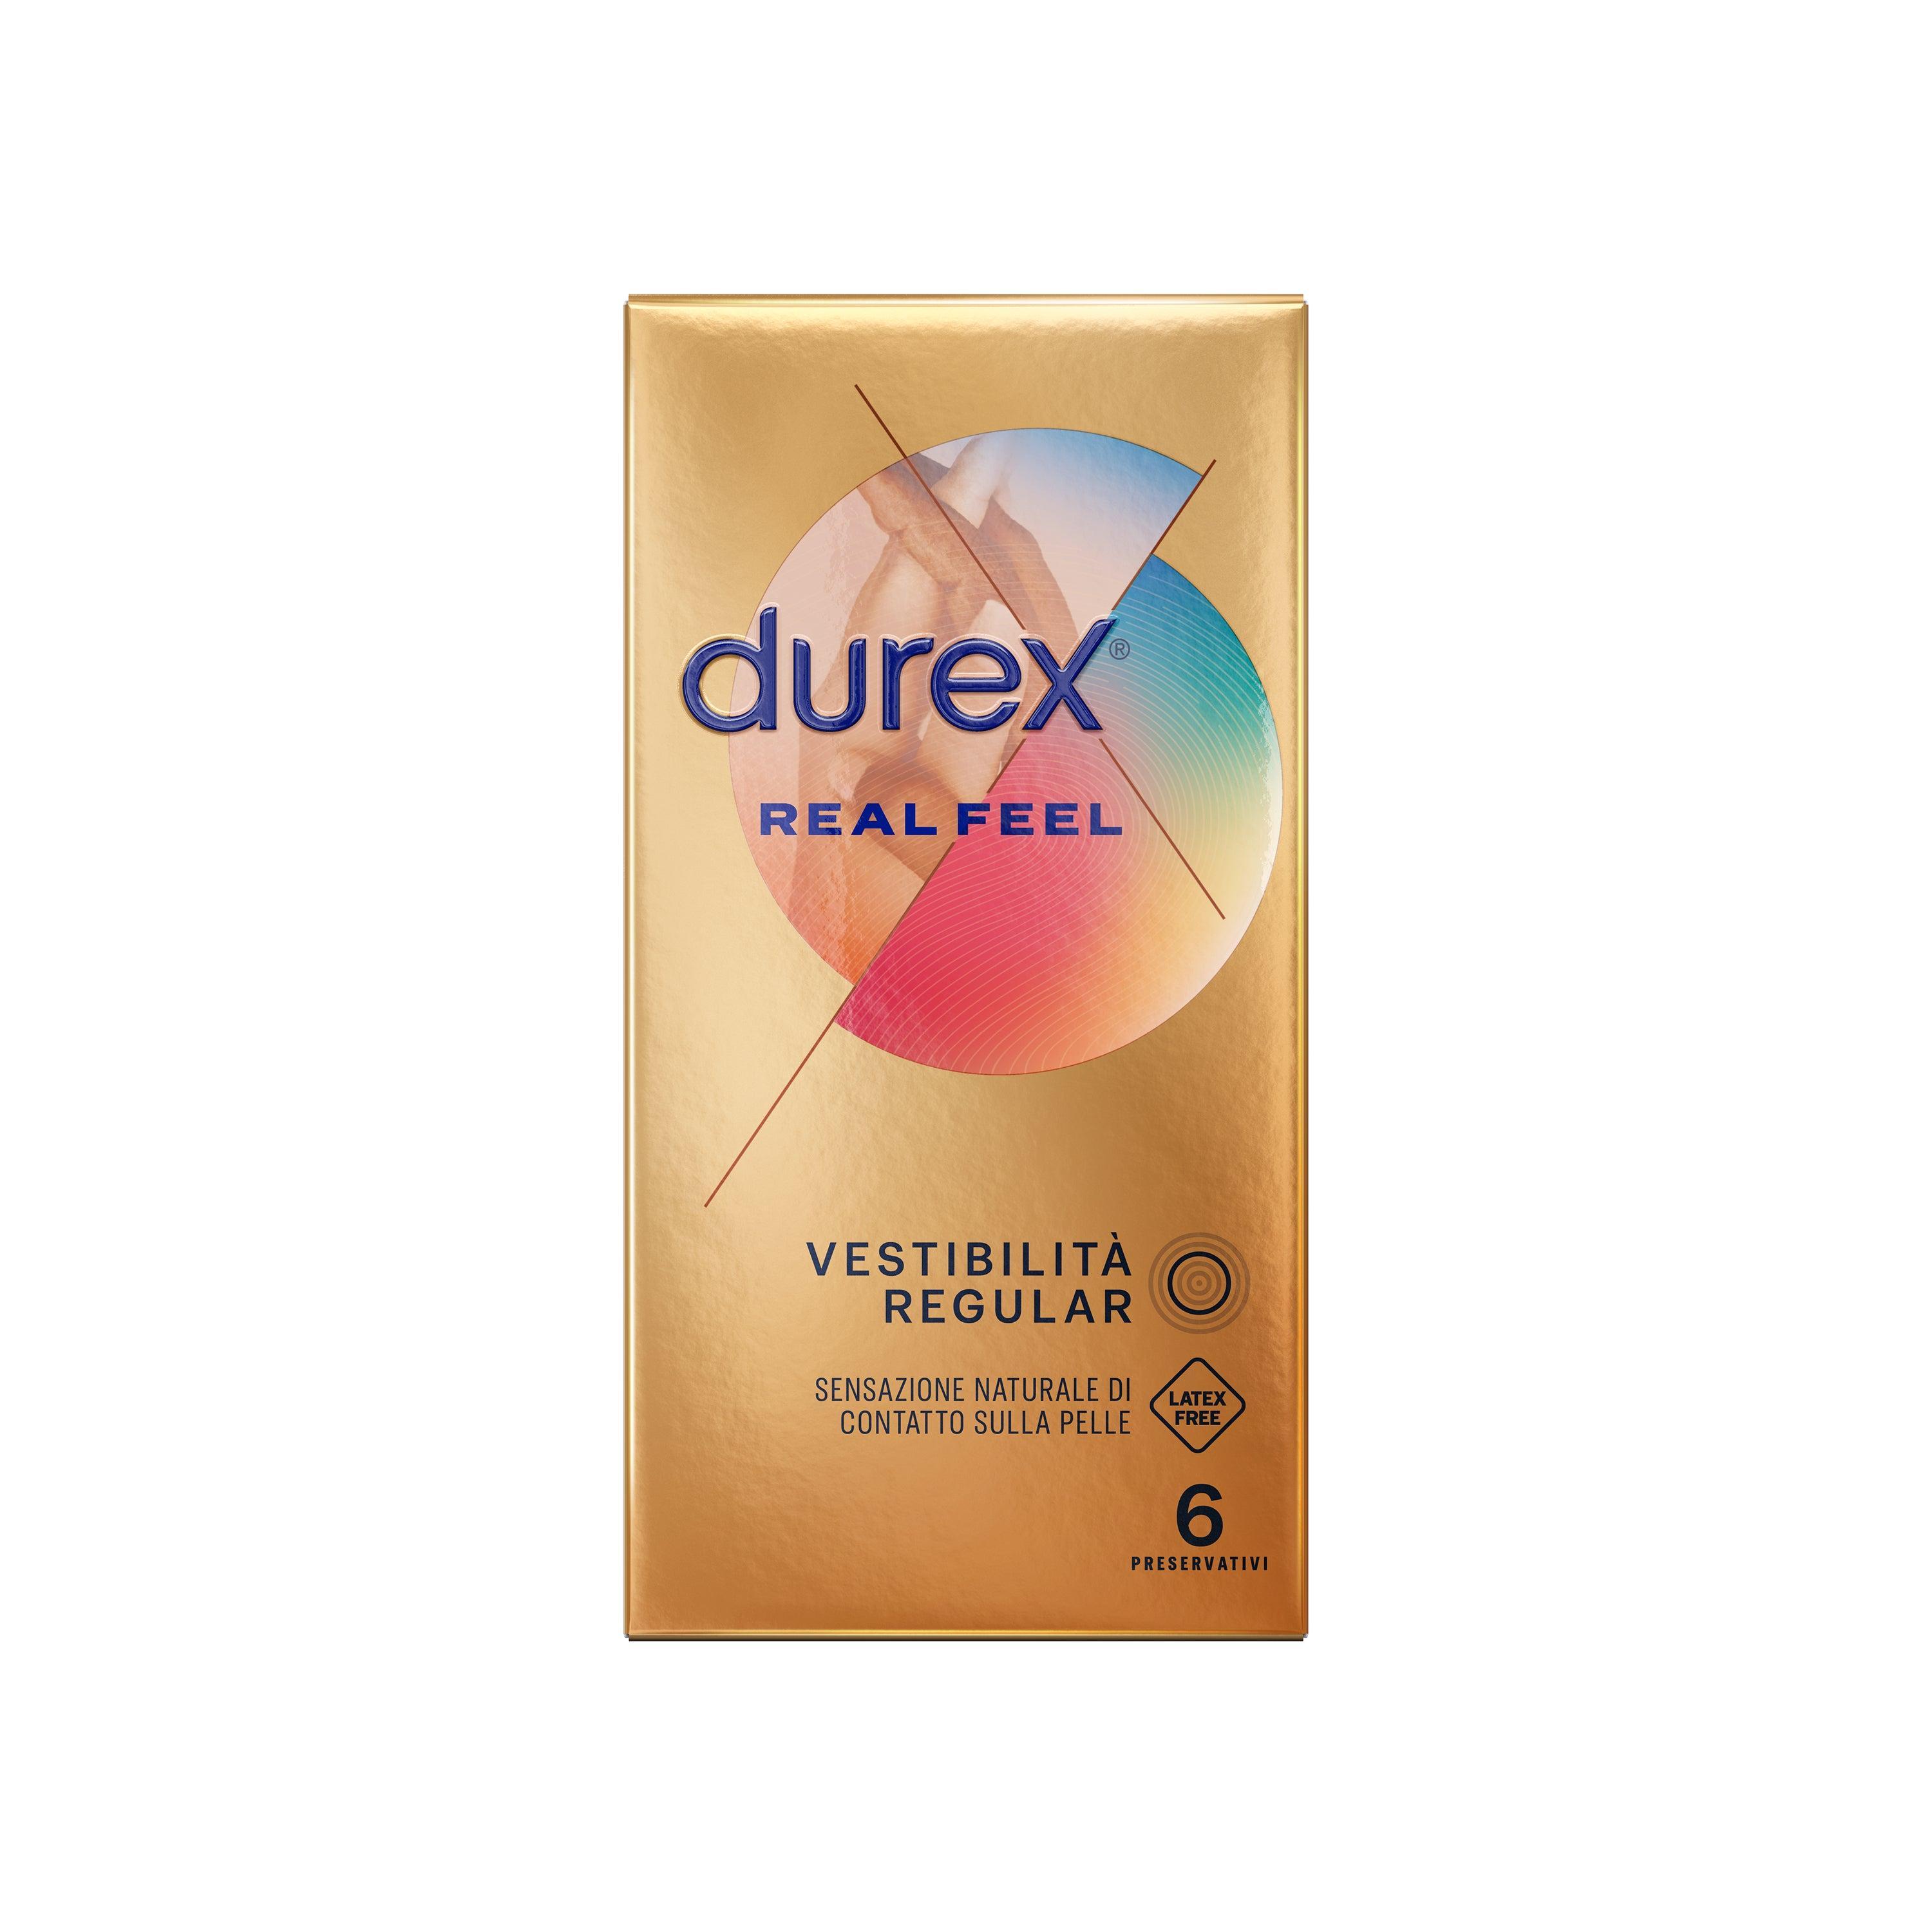 Preservativi Durex real feel confezione da 6